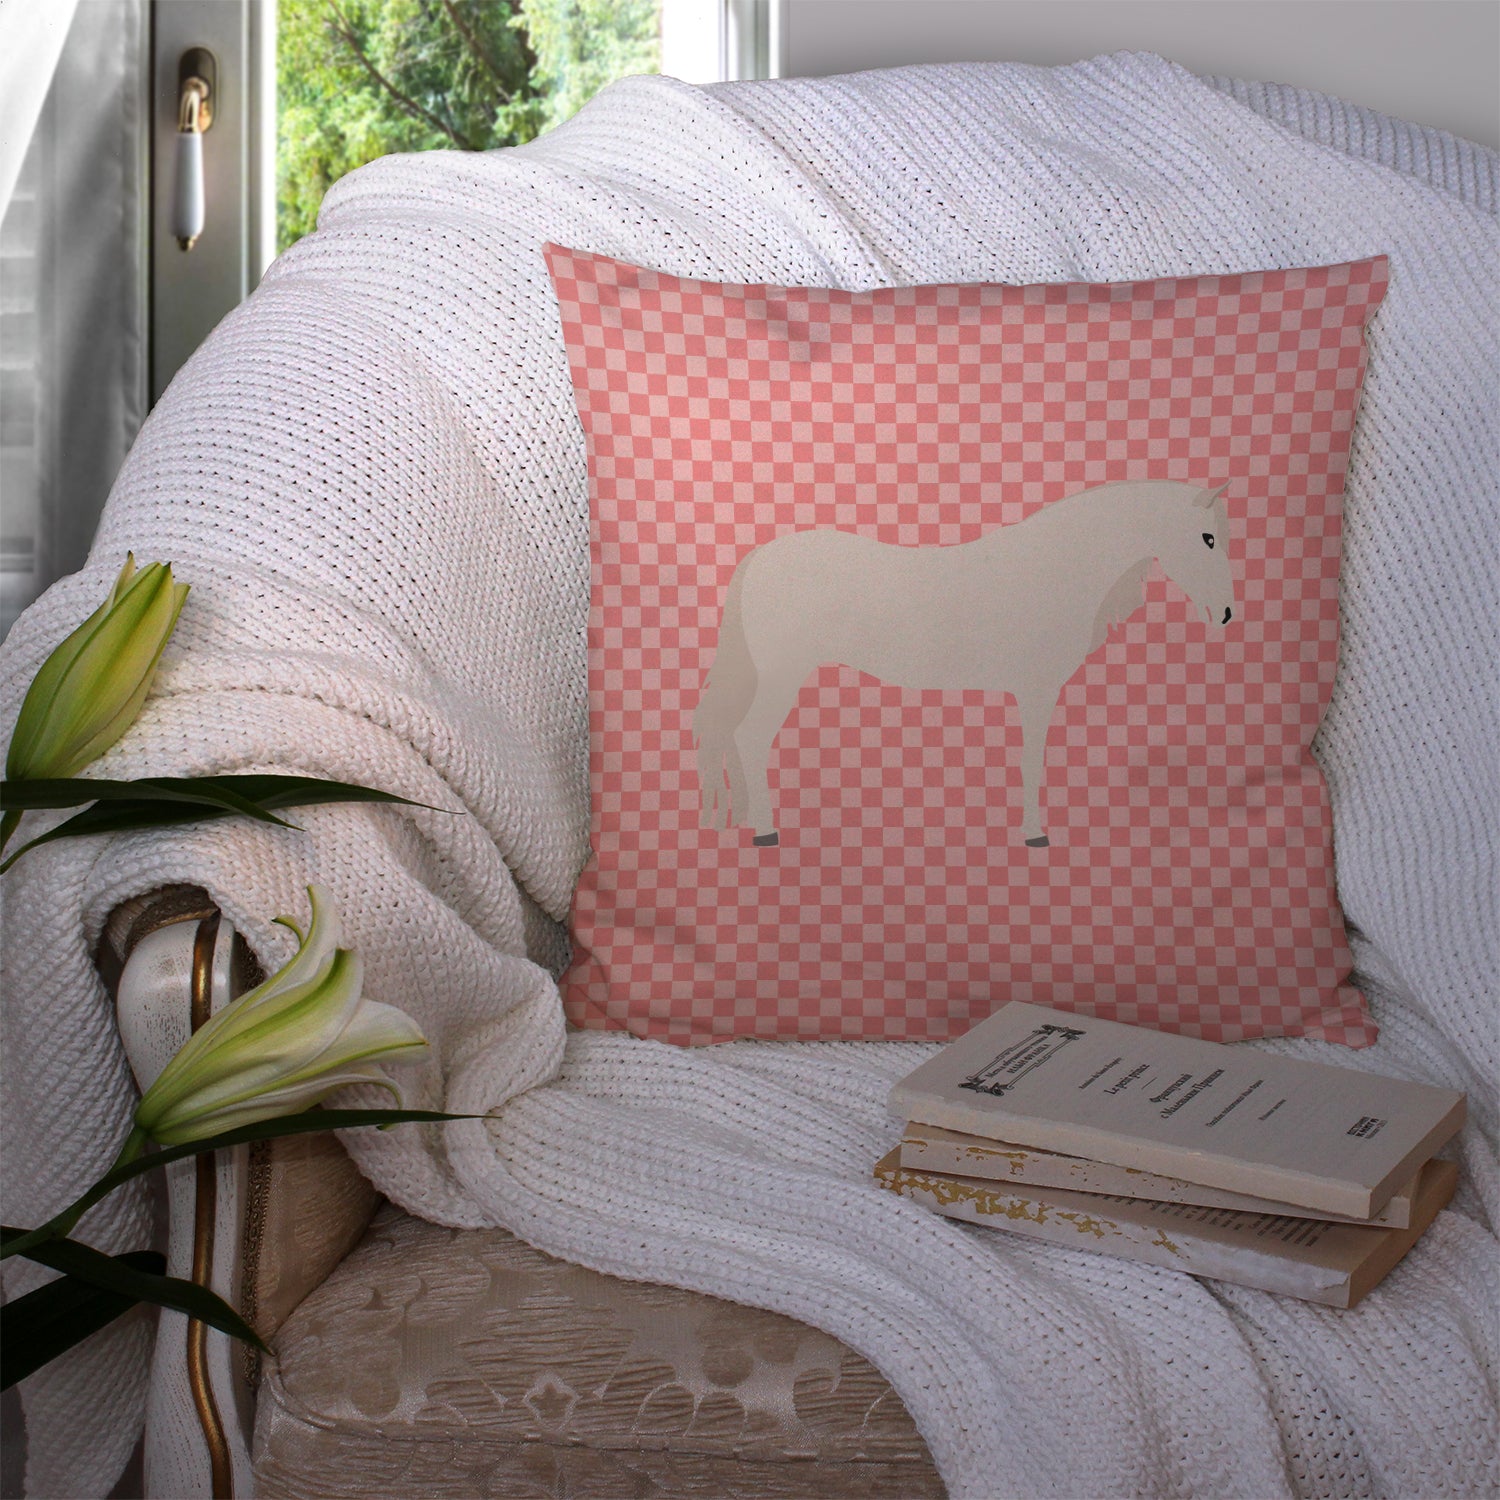 Paso Fino Horse Pink Check Fabric Decorative Pillow BB7905PW1414 - the-store.com